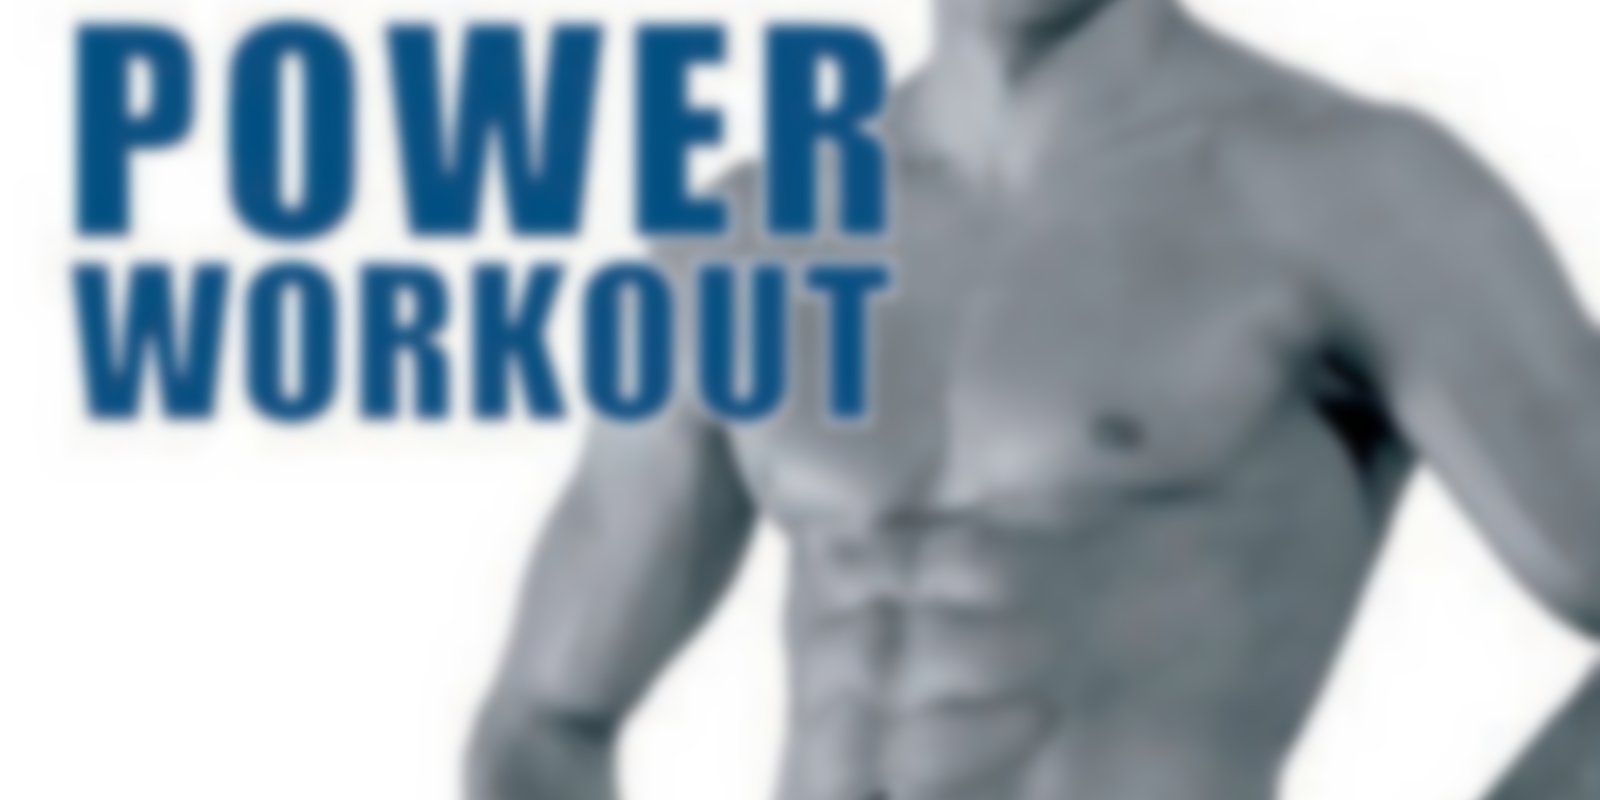 Men's Health Power Workout